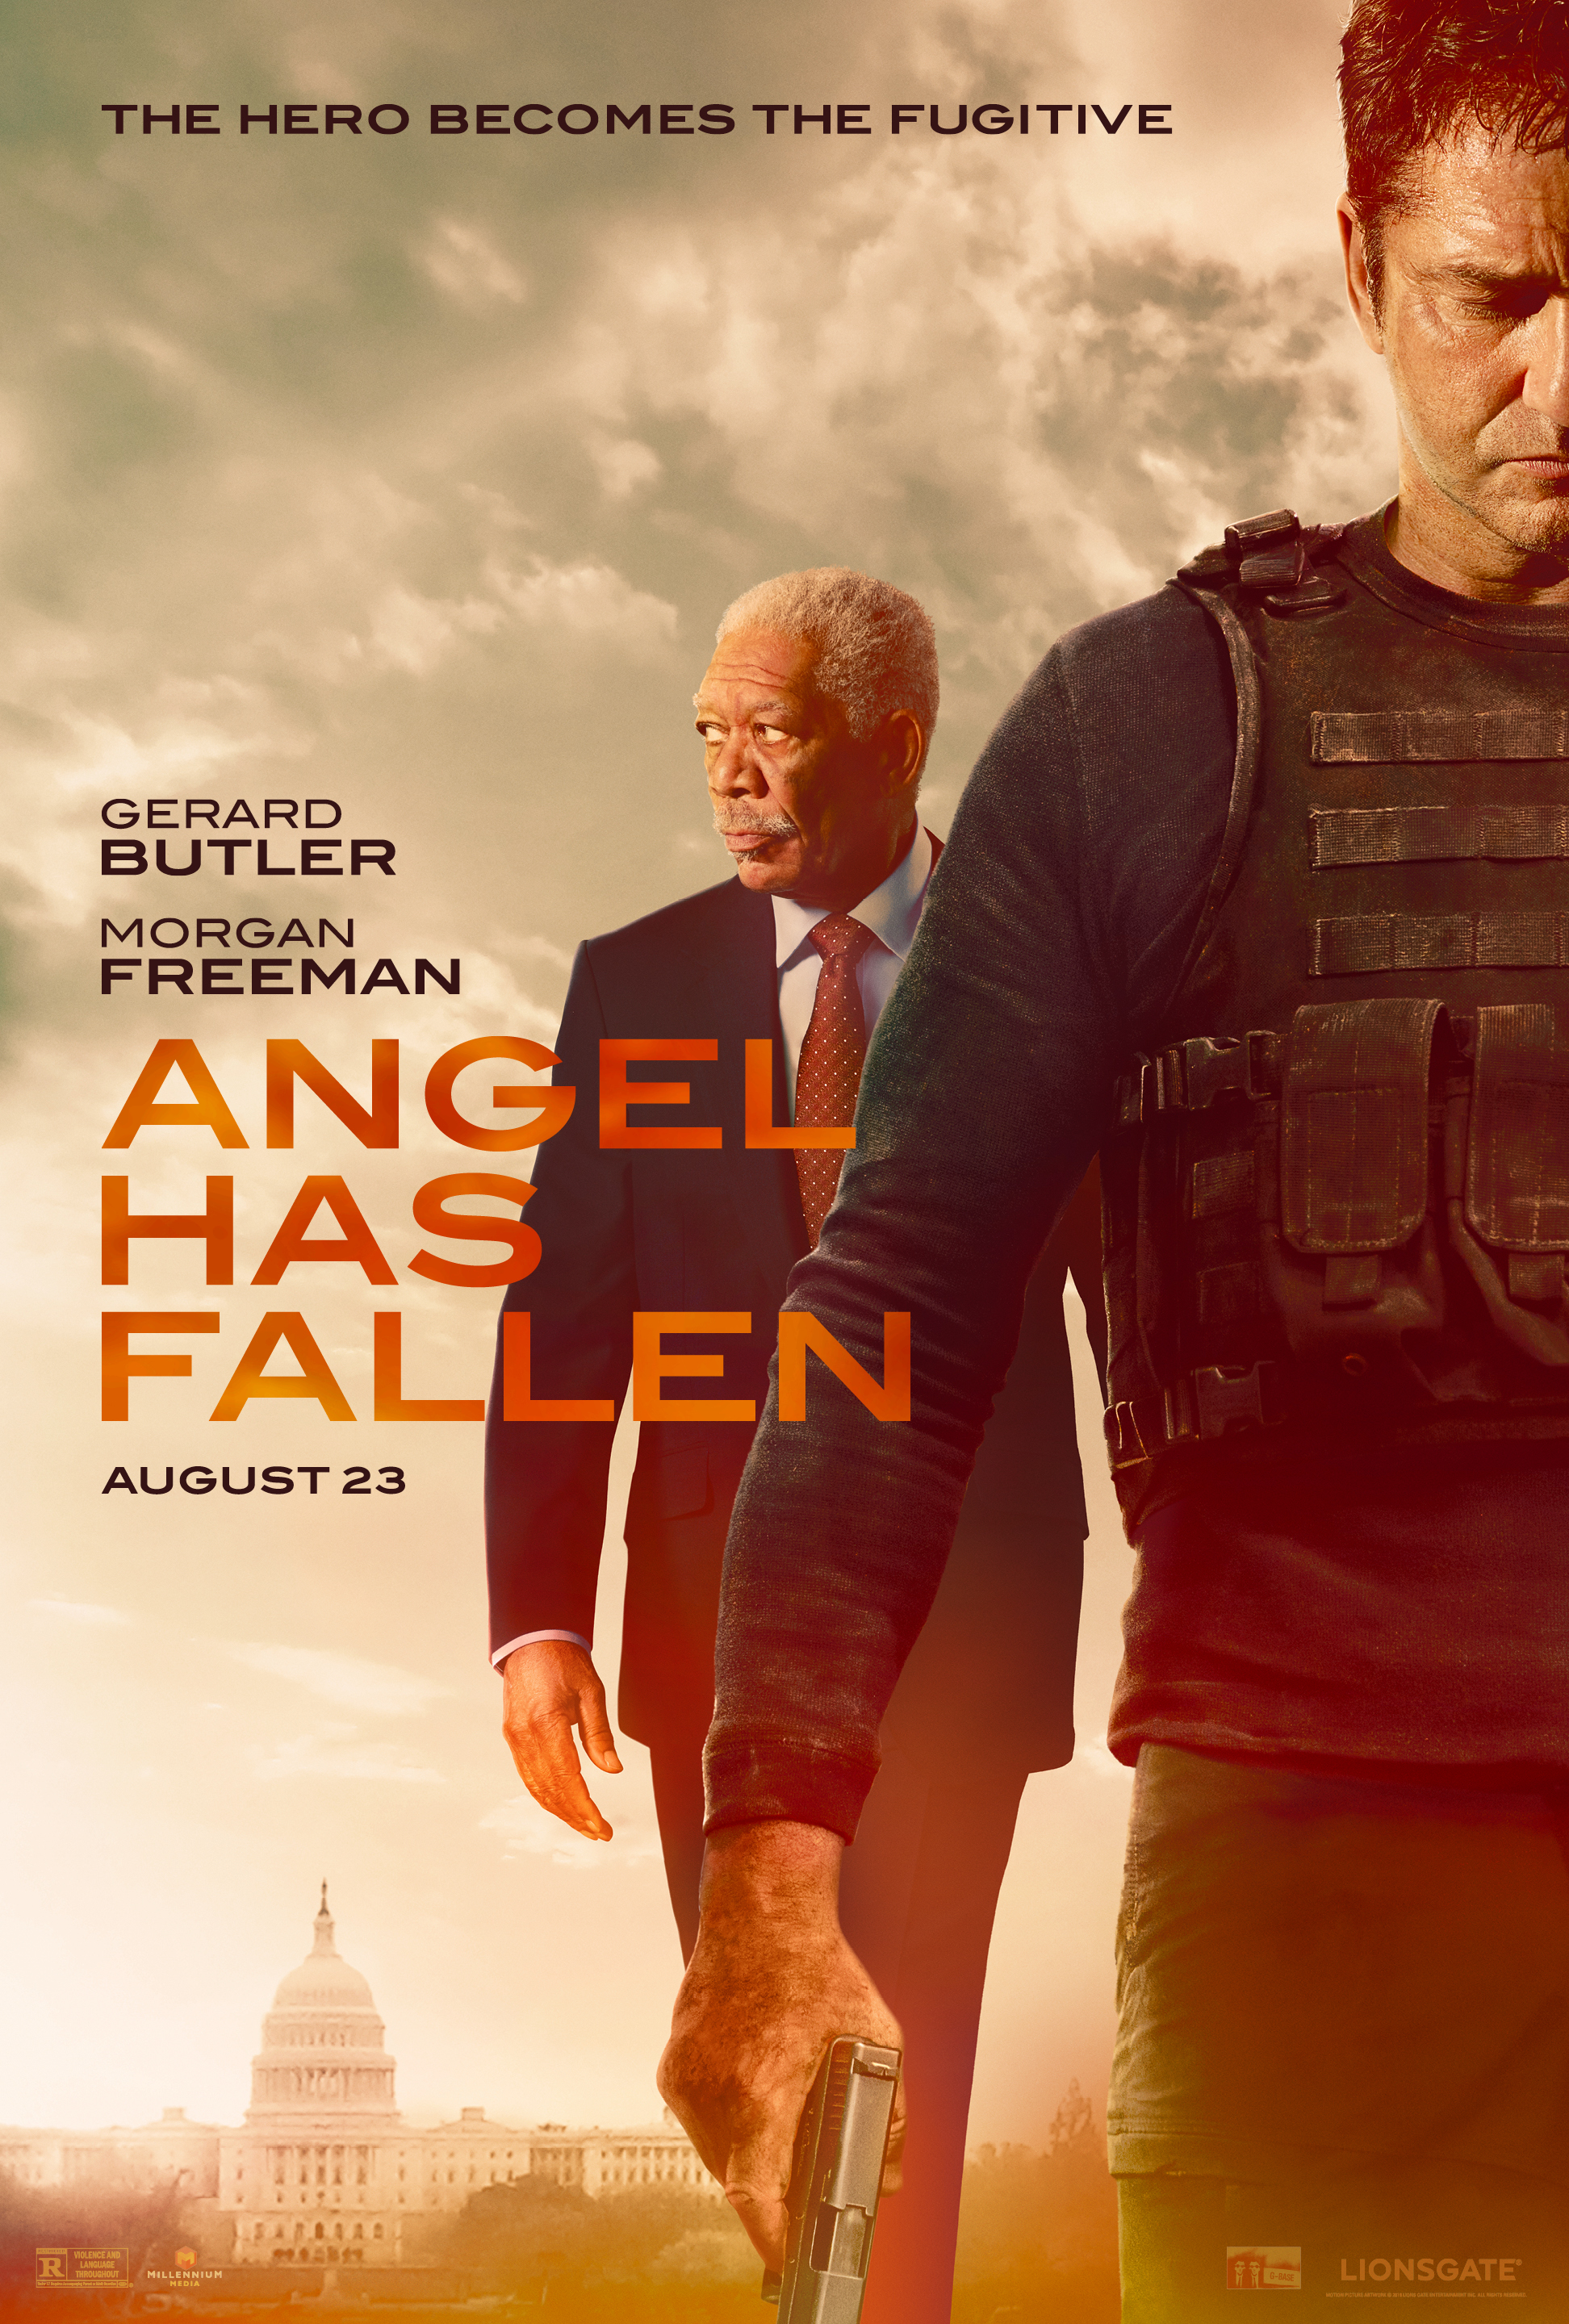 Stiahni si Filmy s titulkama Pad andela / Angel Has Fallen (2019)[BRRip] = CSFD 63%